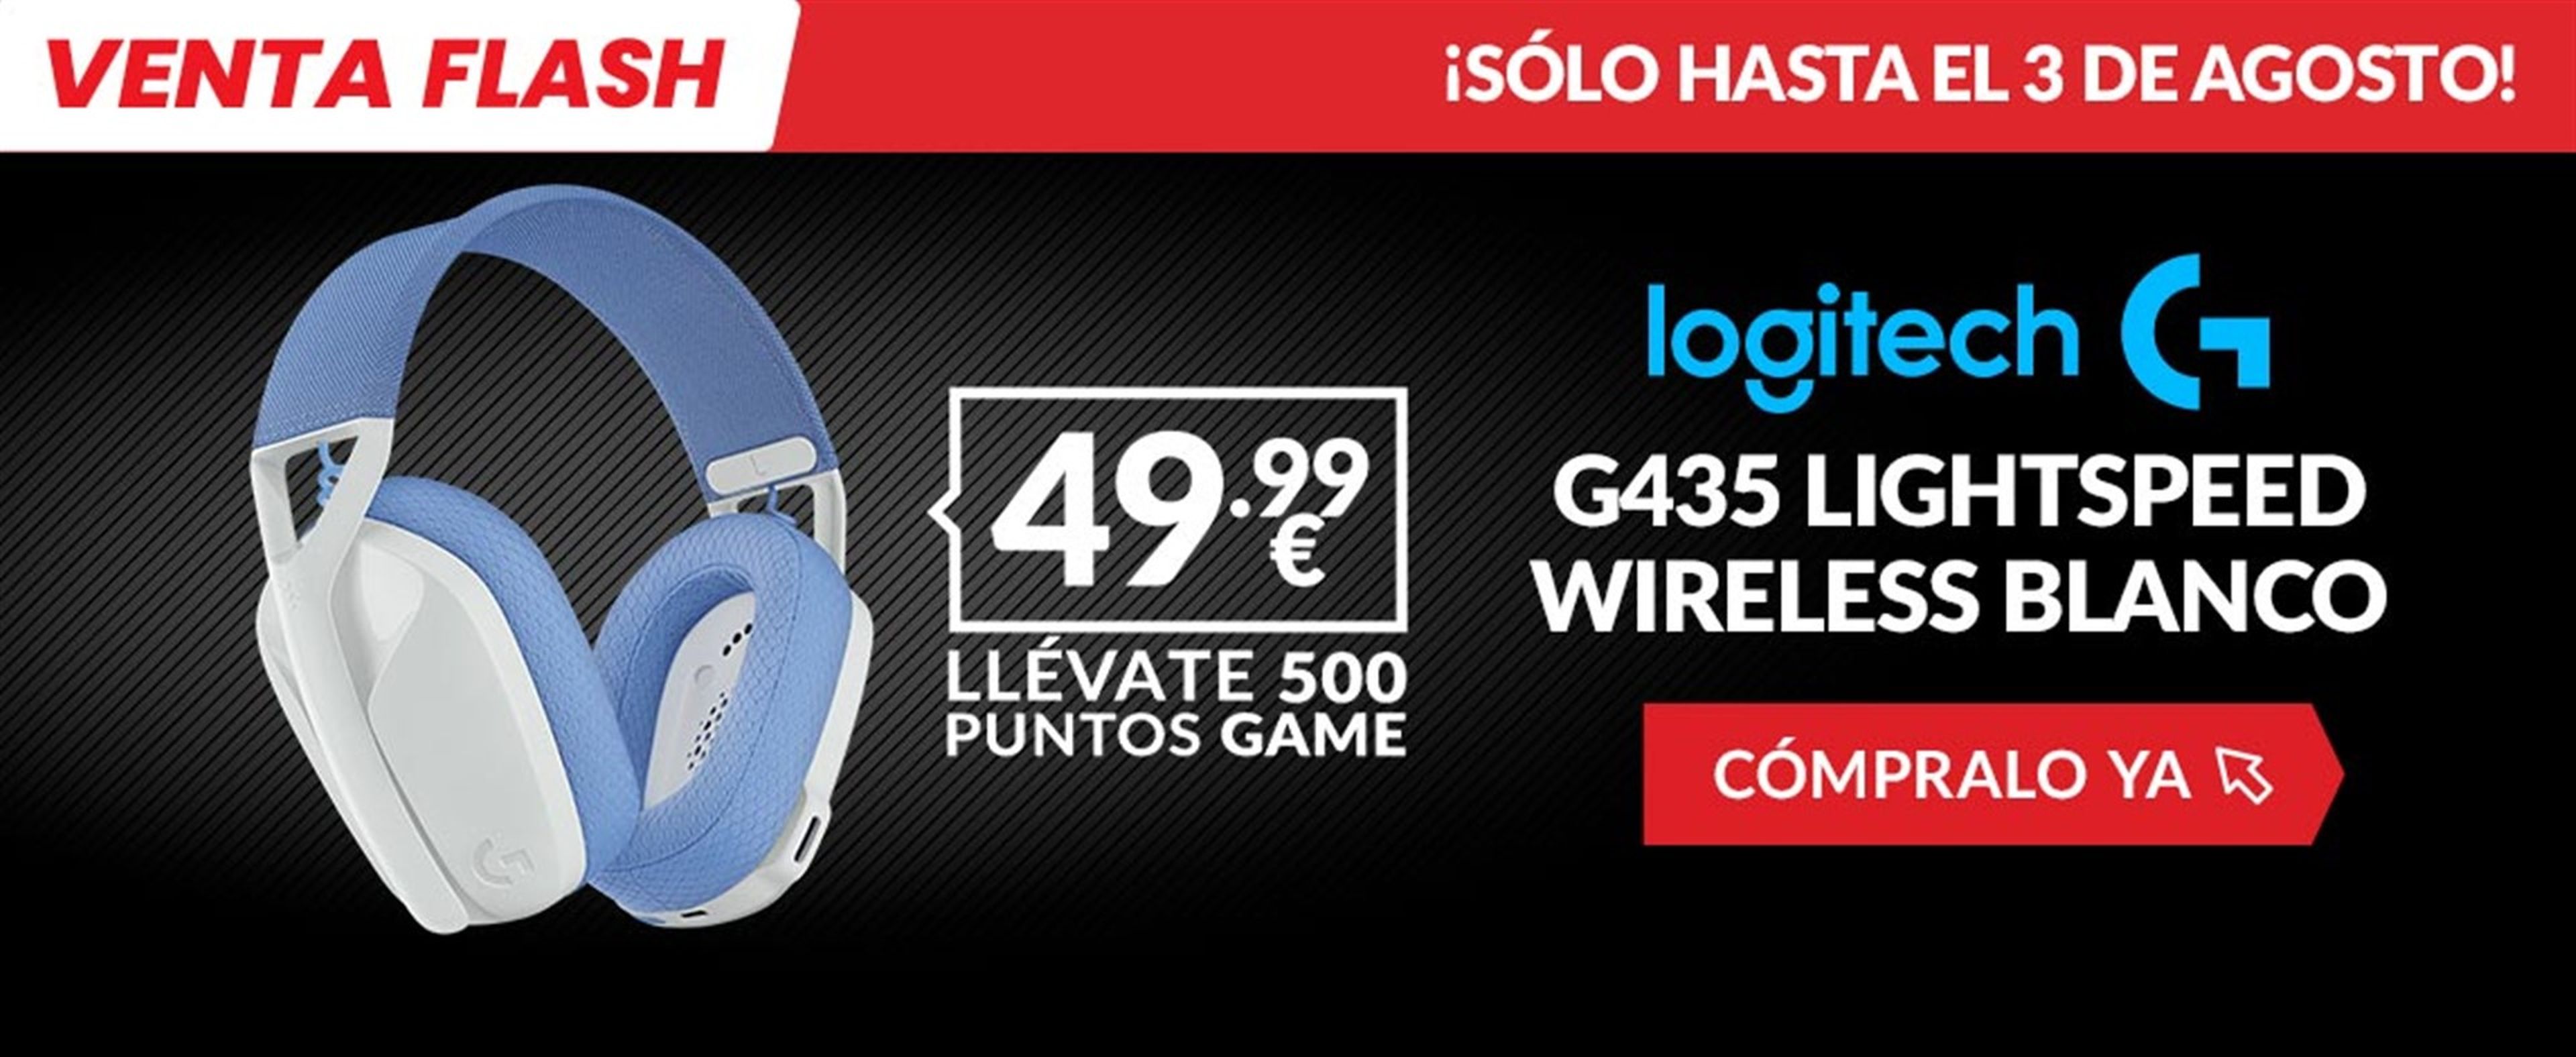 Logitech G435 LightSpeed - Nuevas venta flash de GAME